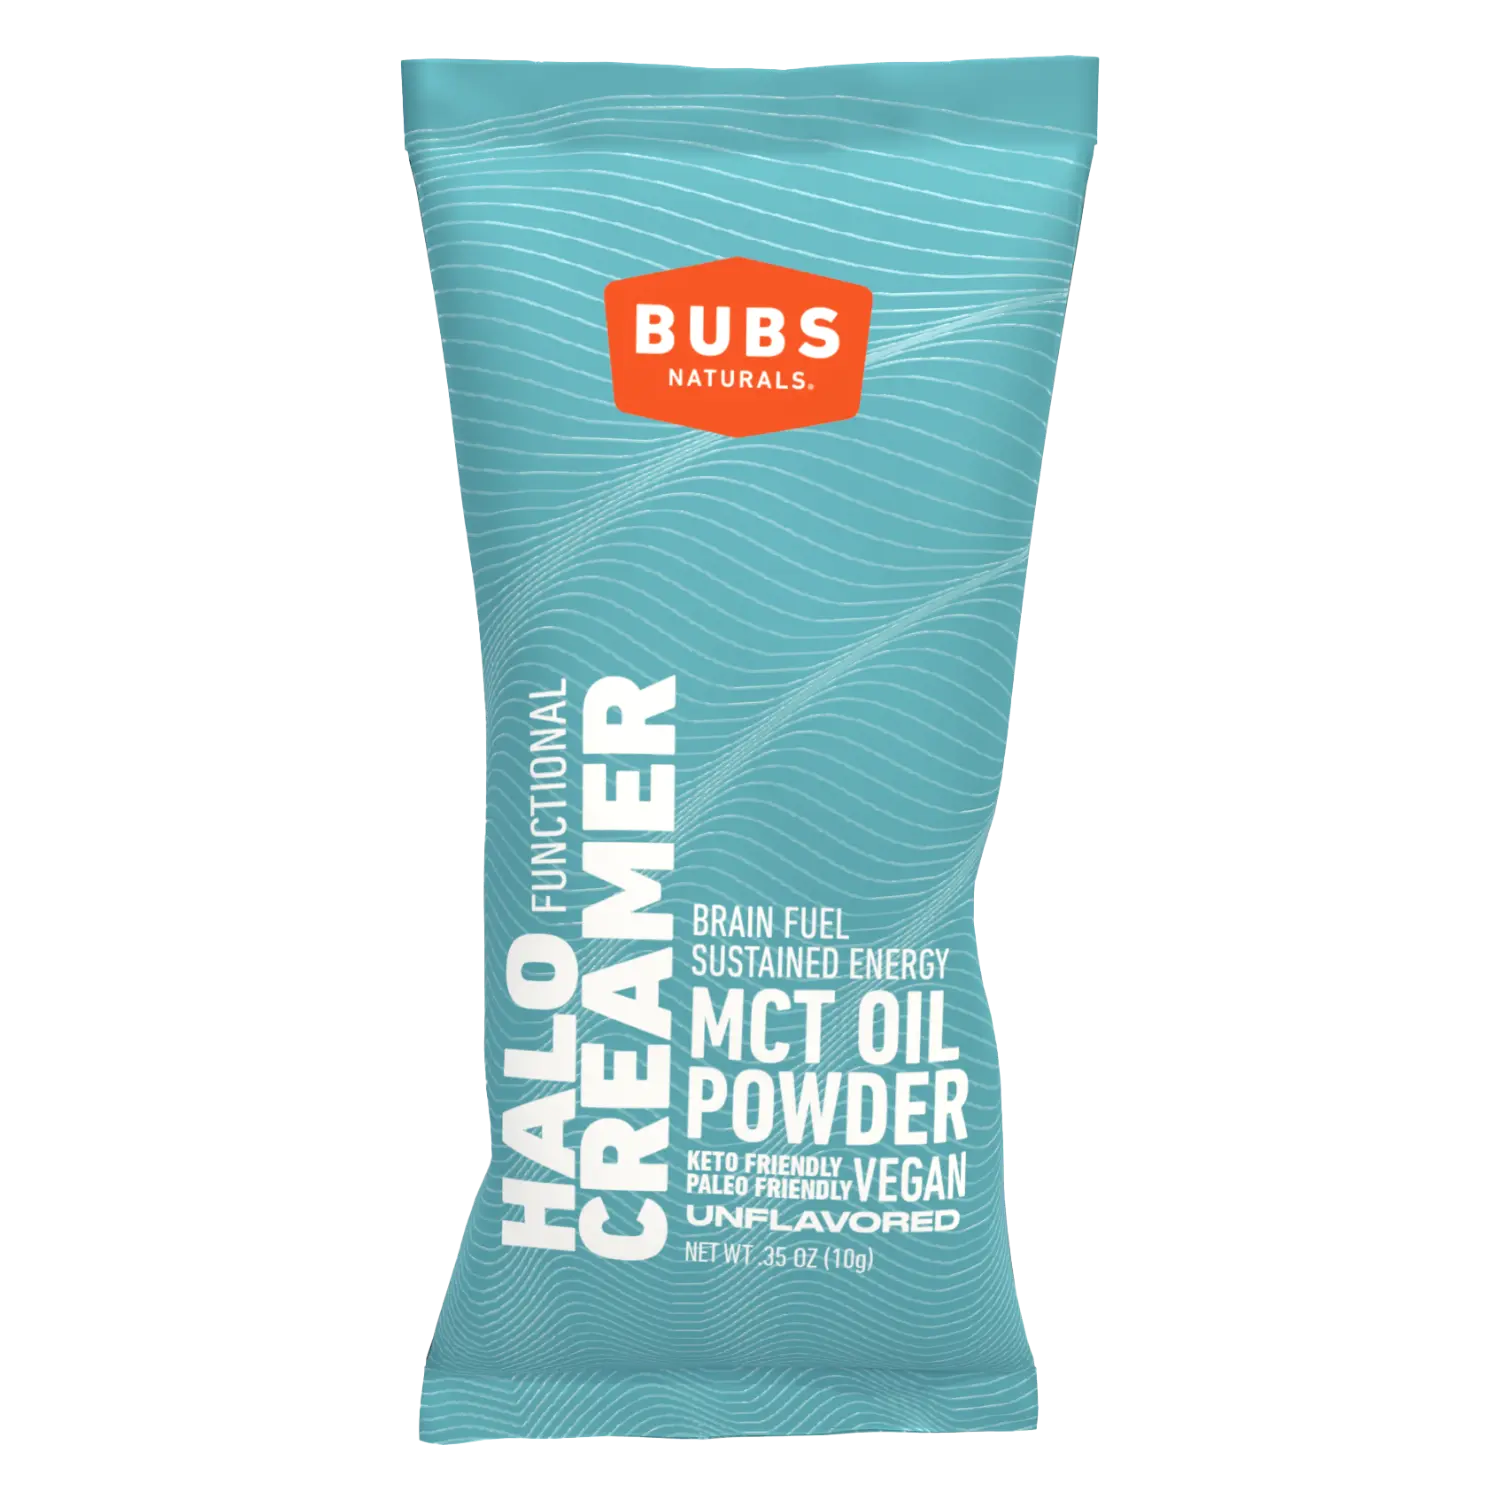 BUBS Naturals MCT Oil Powder, Vegan Halo Functional Creamer, individual stick pack